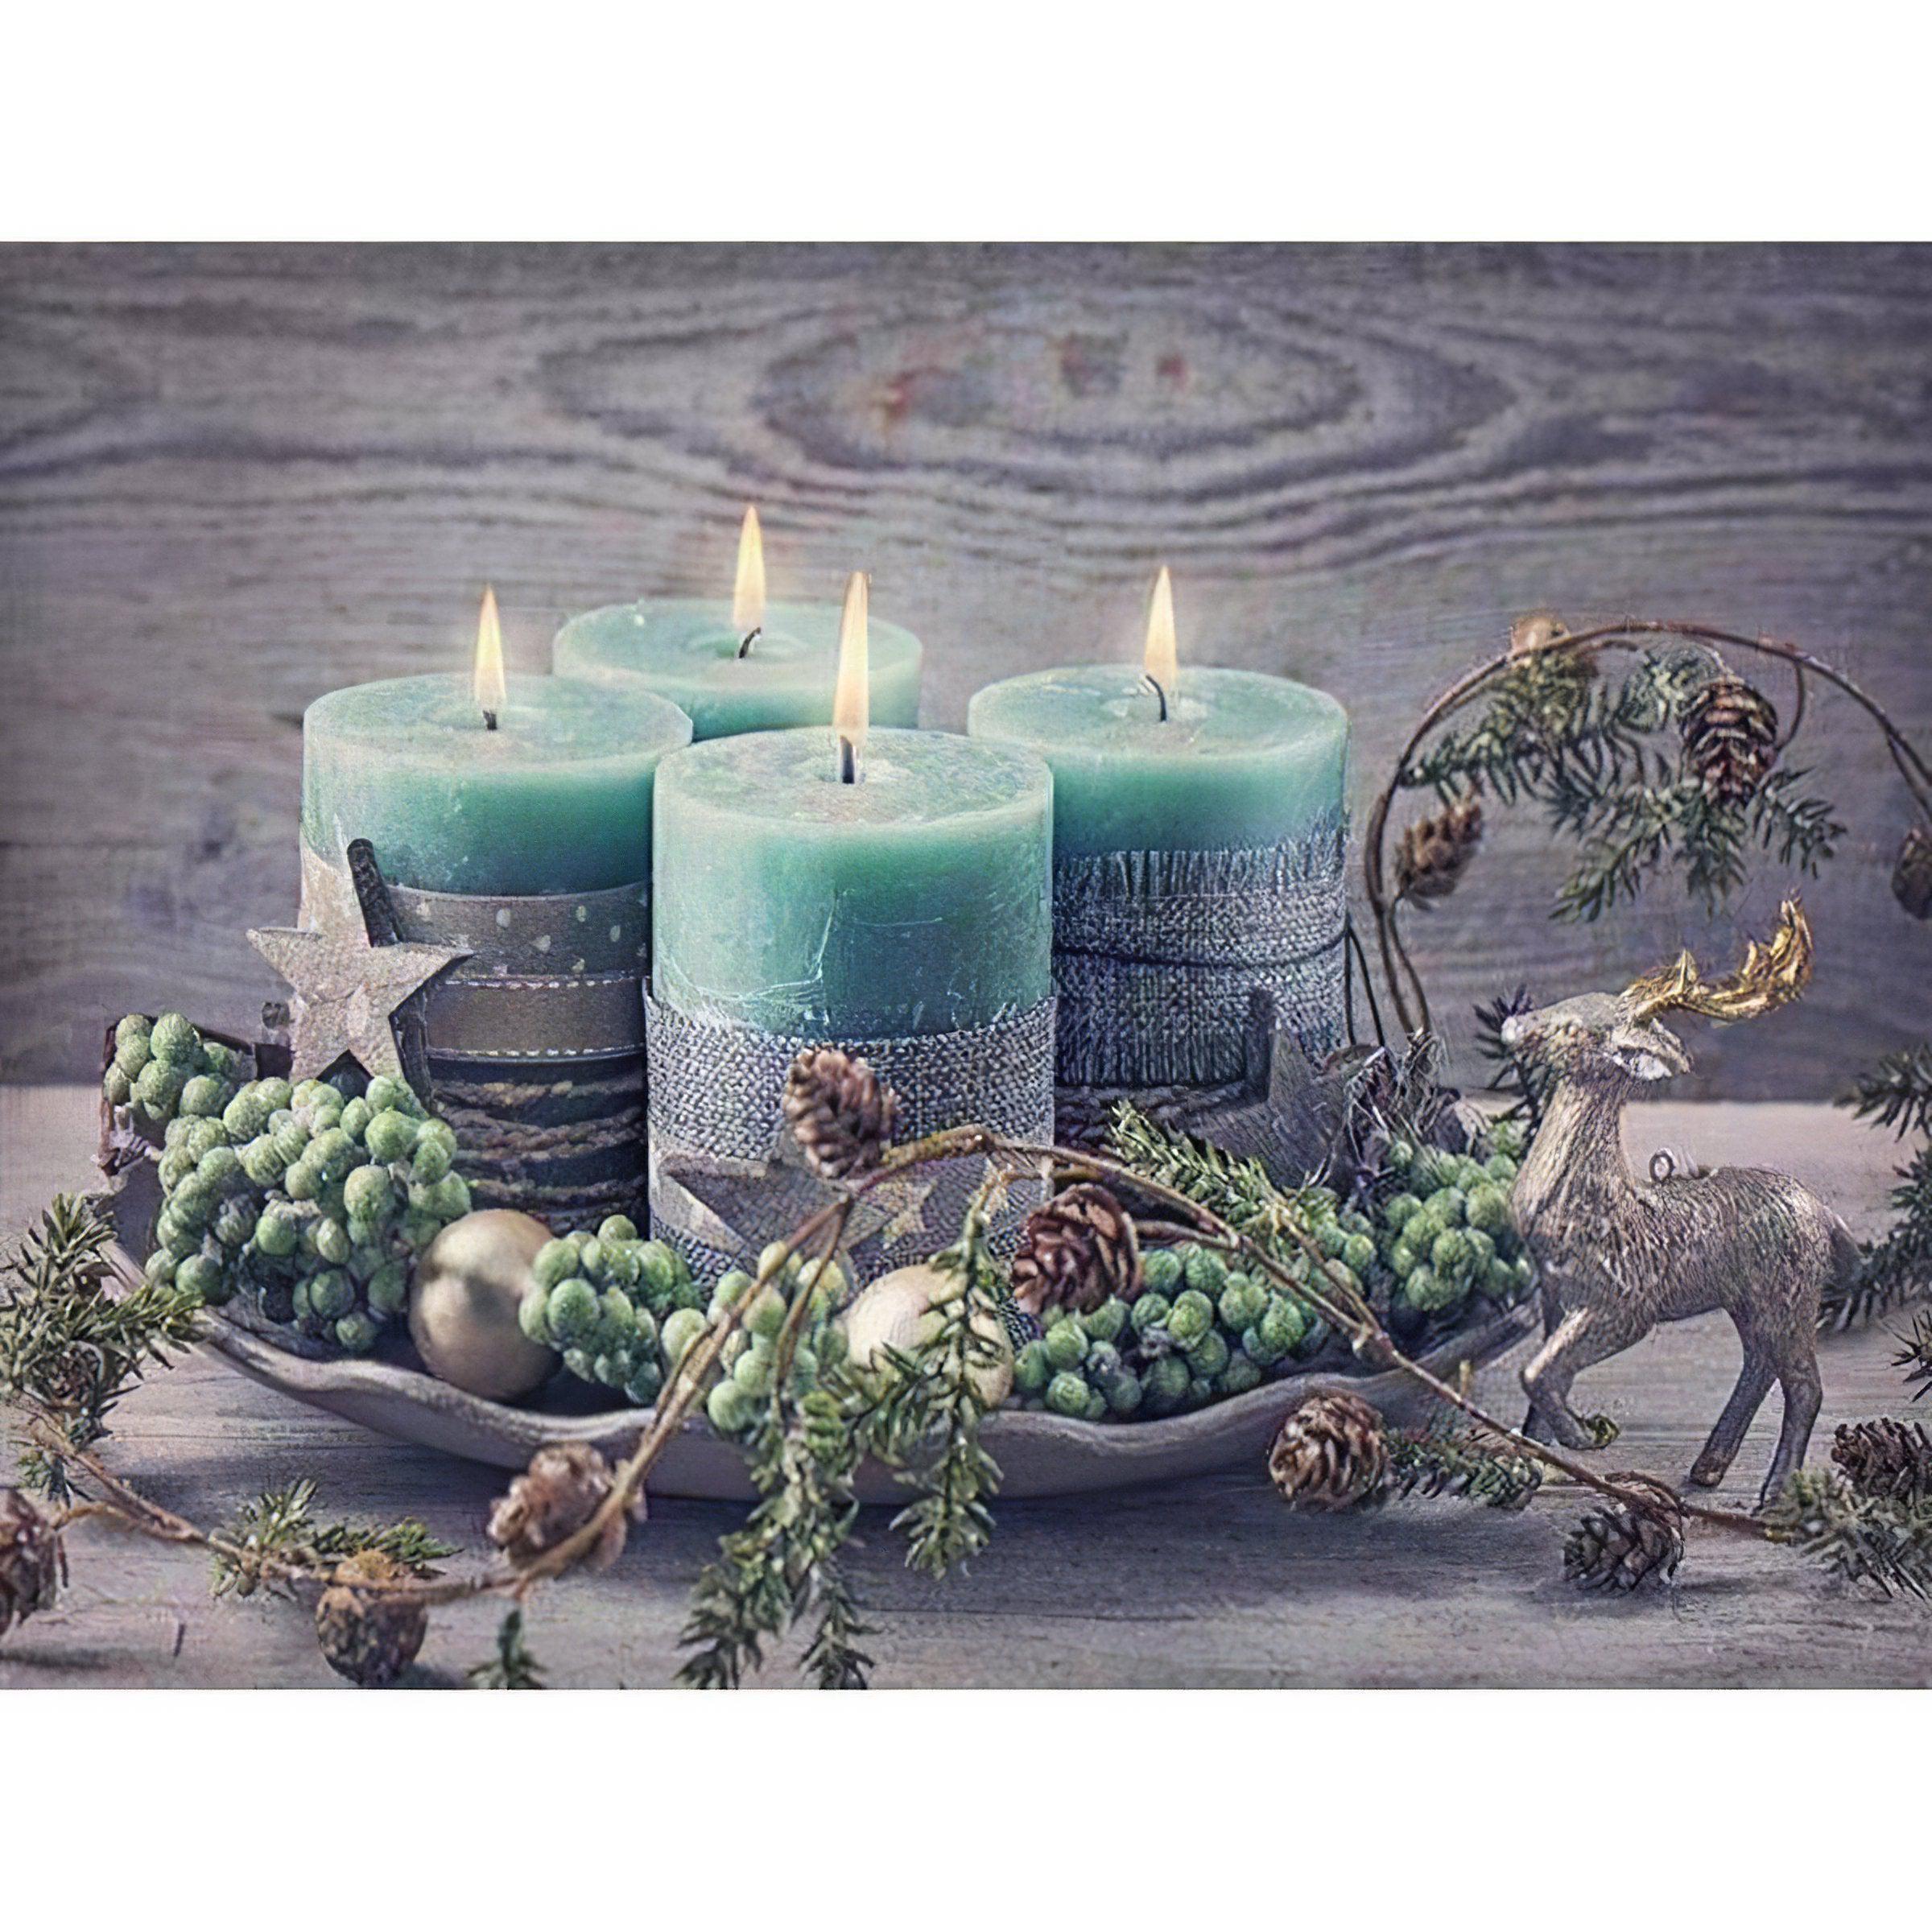 Light up your holidays with festive Christmas candles.Four Beautiful Candles Of Christmas - Diamondartlove